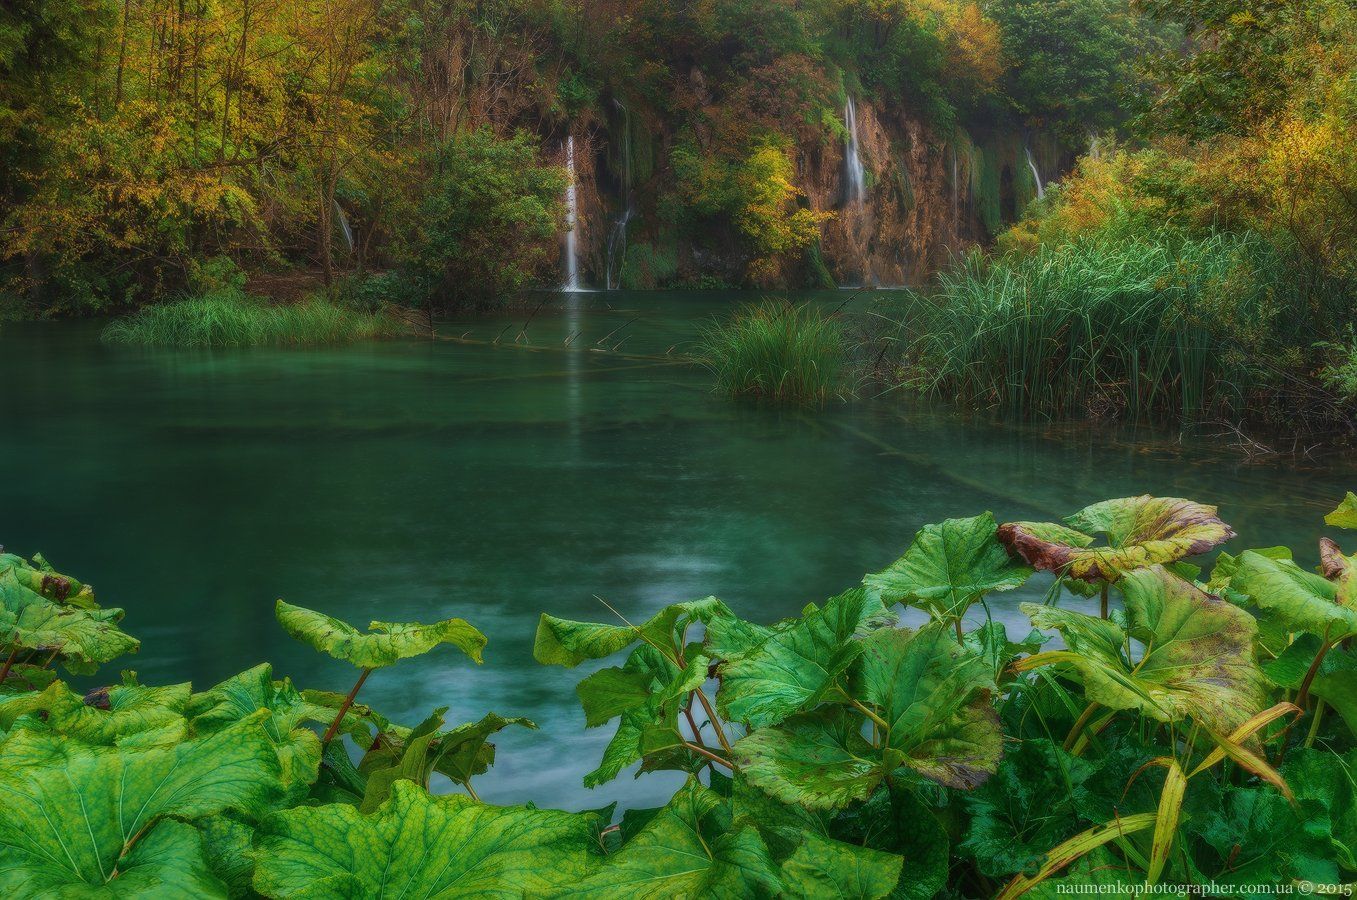 водопад,	деревья,	озеро, осень,	панорама,	пейзаж, плитвицкие озера,	размер, хорватия, naumenkophotographer,	sony a 7r, Александр Науменко